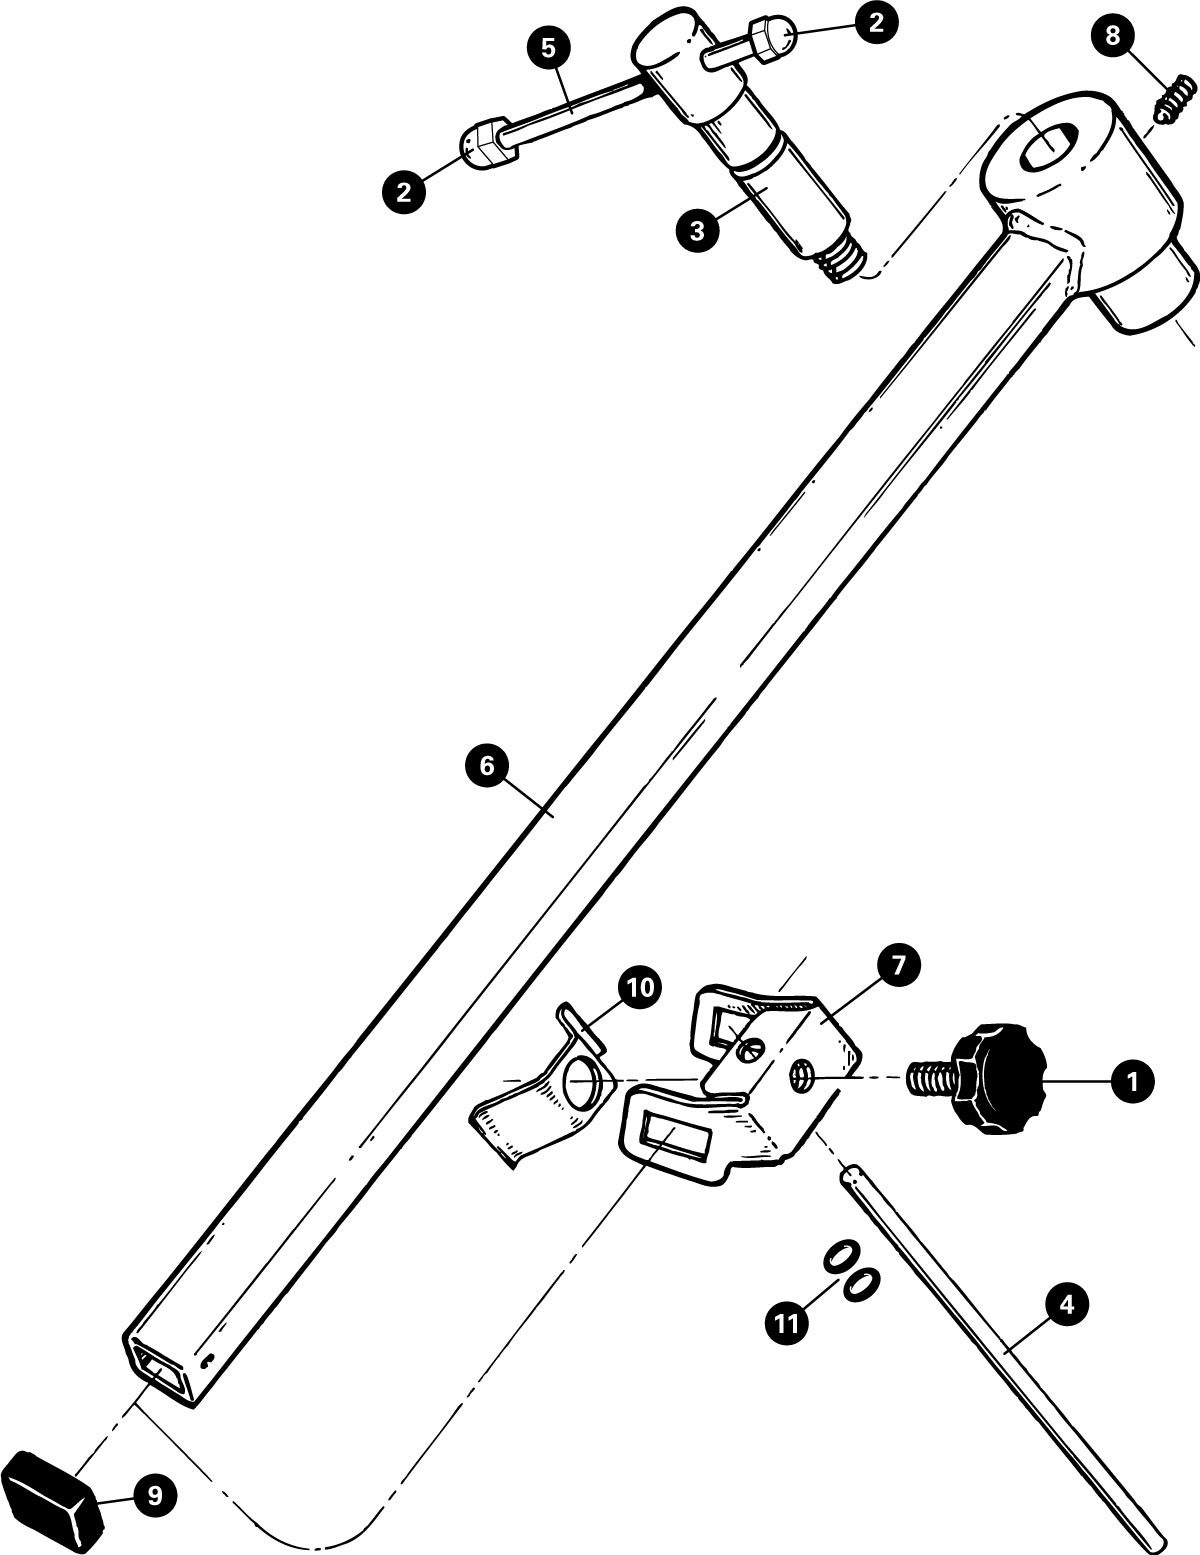 Parts diagram for DAG-1 Derailleur Hanger Alignment Gauge, click to enlarge